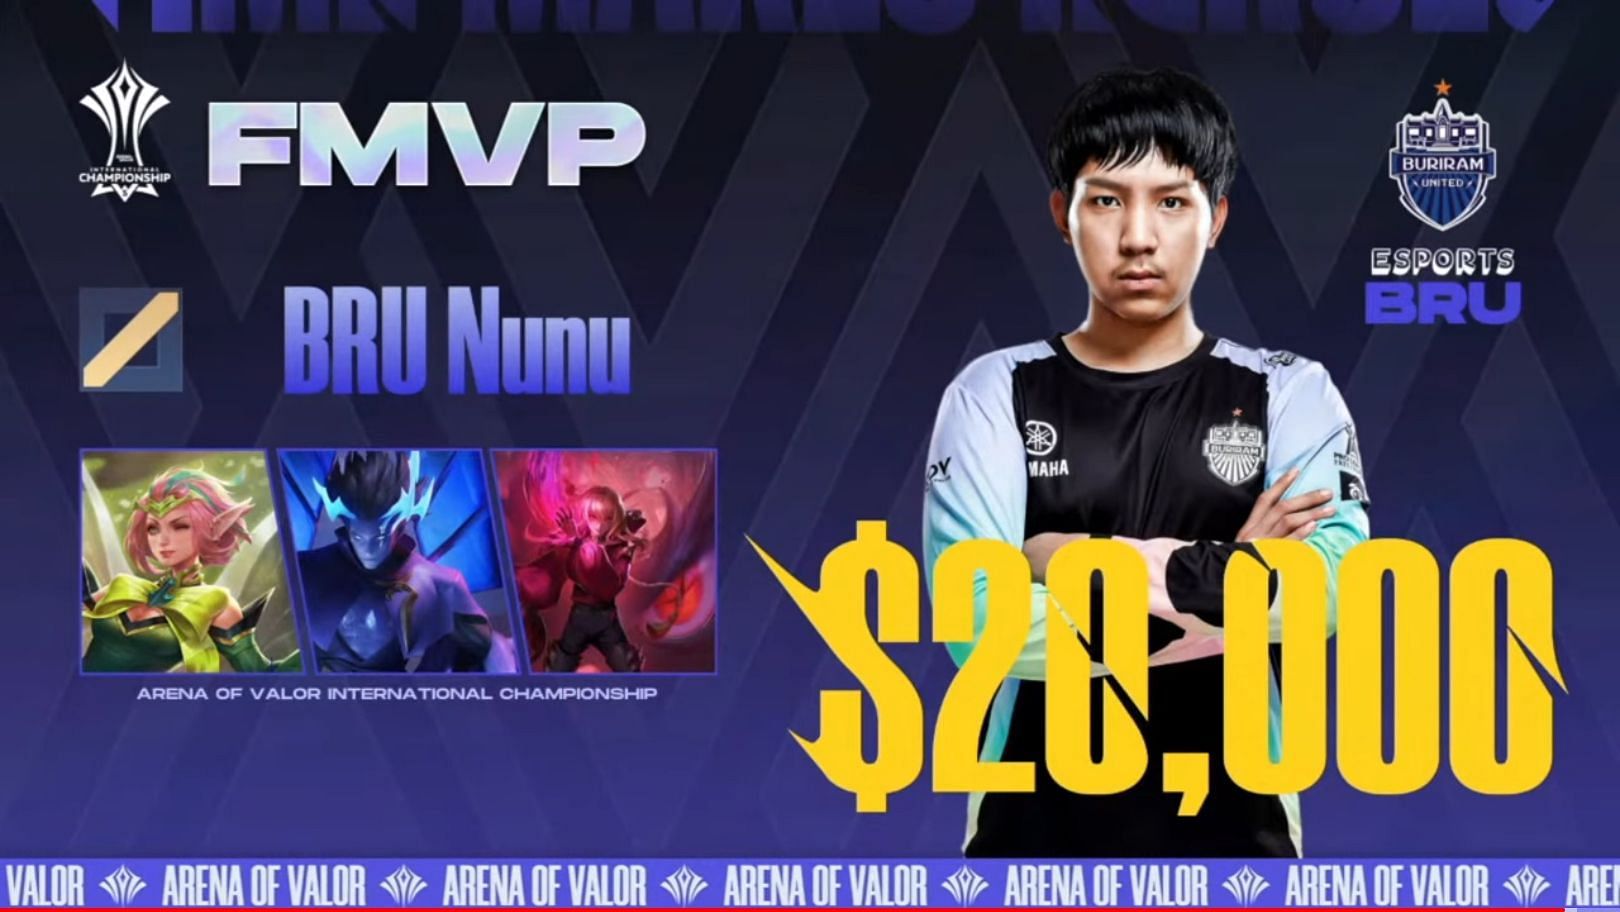 Bru Nunu was the MVP of Arena of Valor International Championship 2021 Finals (Image via YouTube/Garena AOV Indonesia)